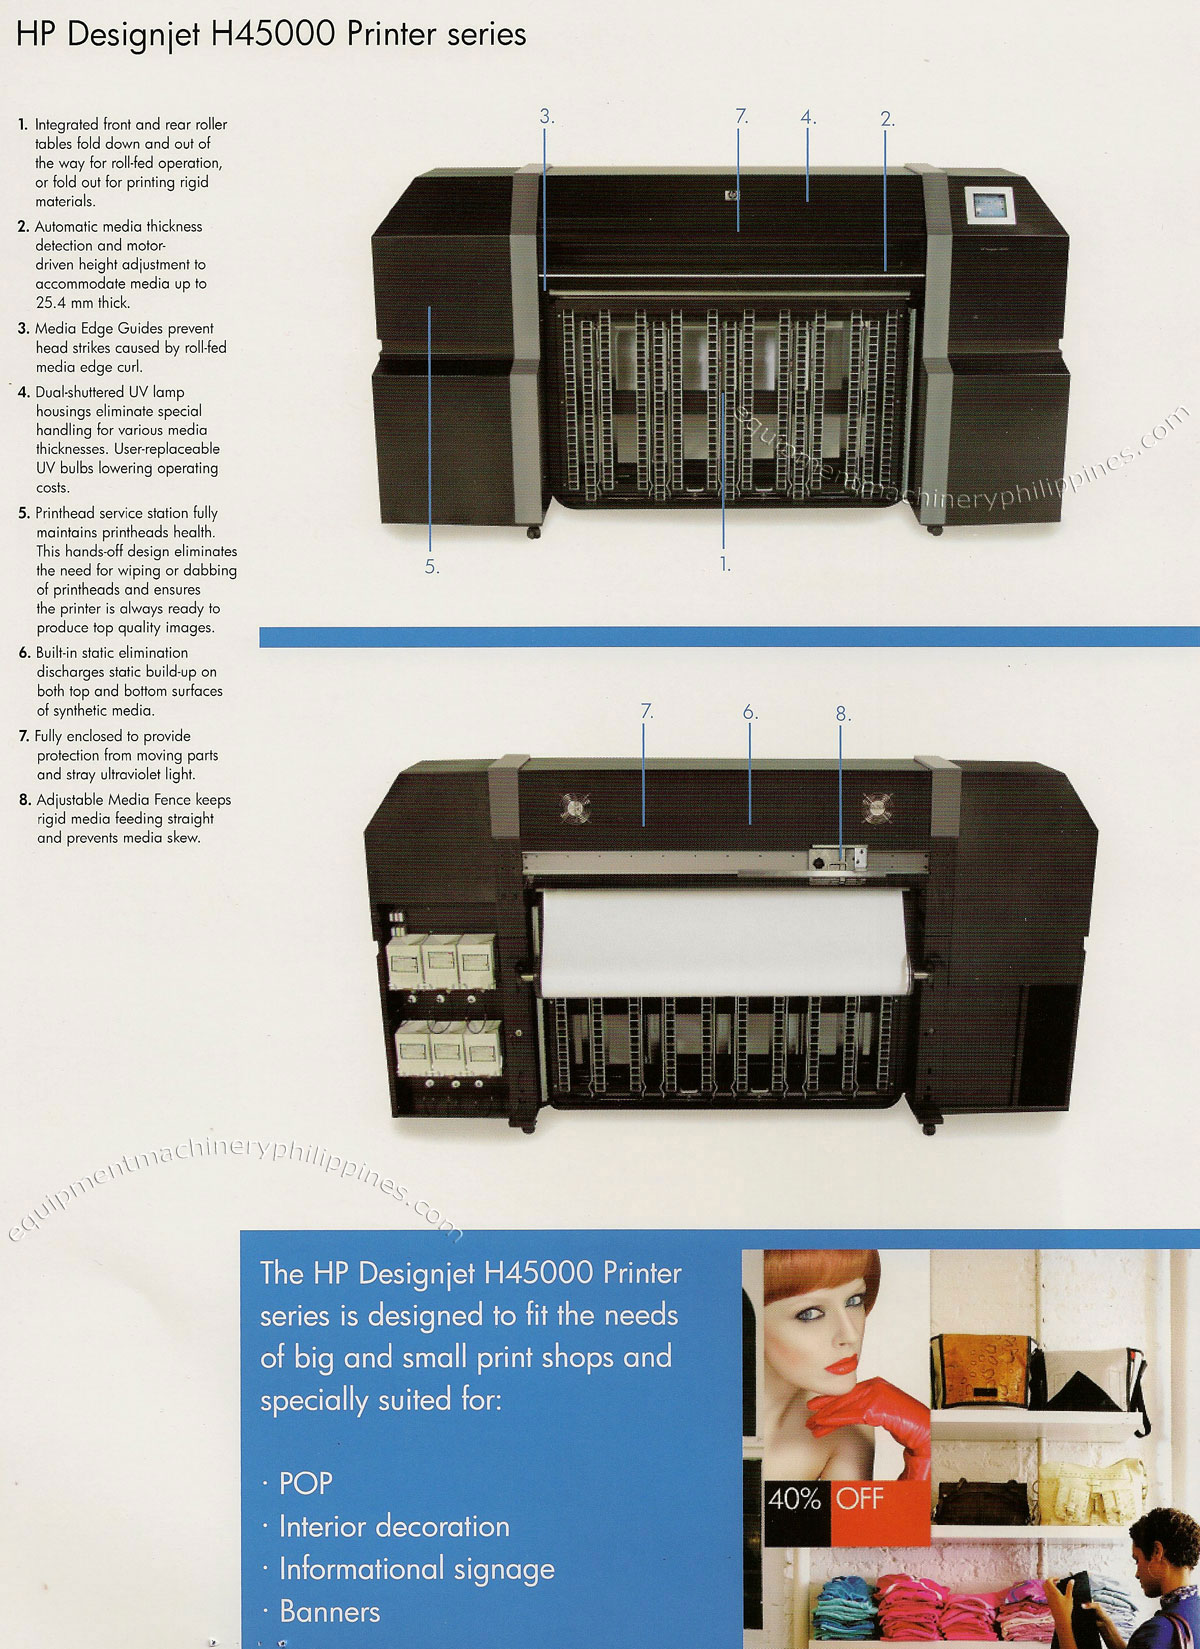 HP Designjet H45000 Printer Series Features